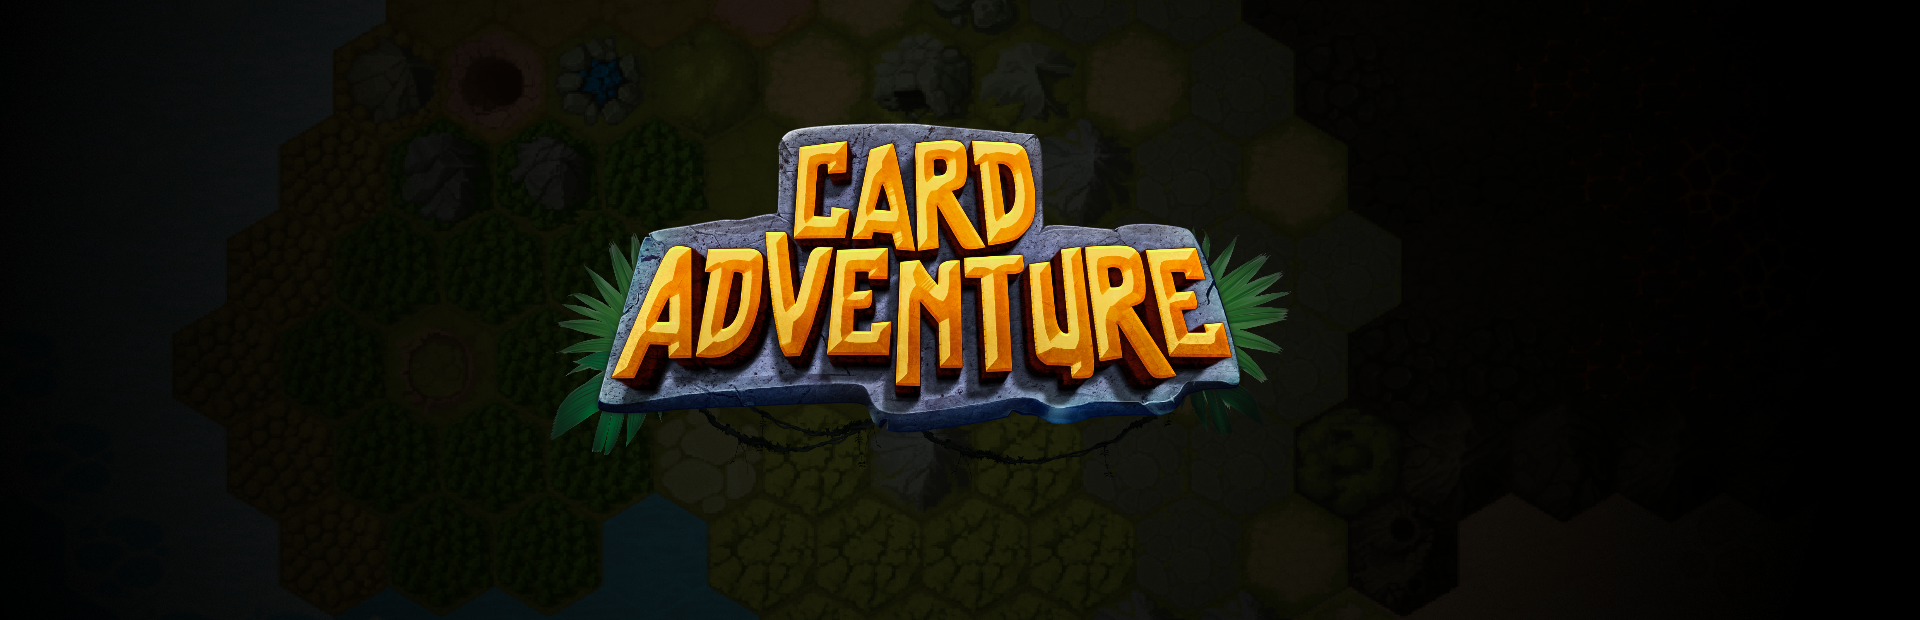 Card Adventure